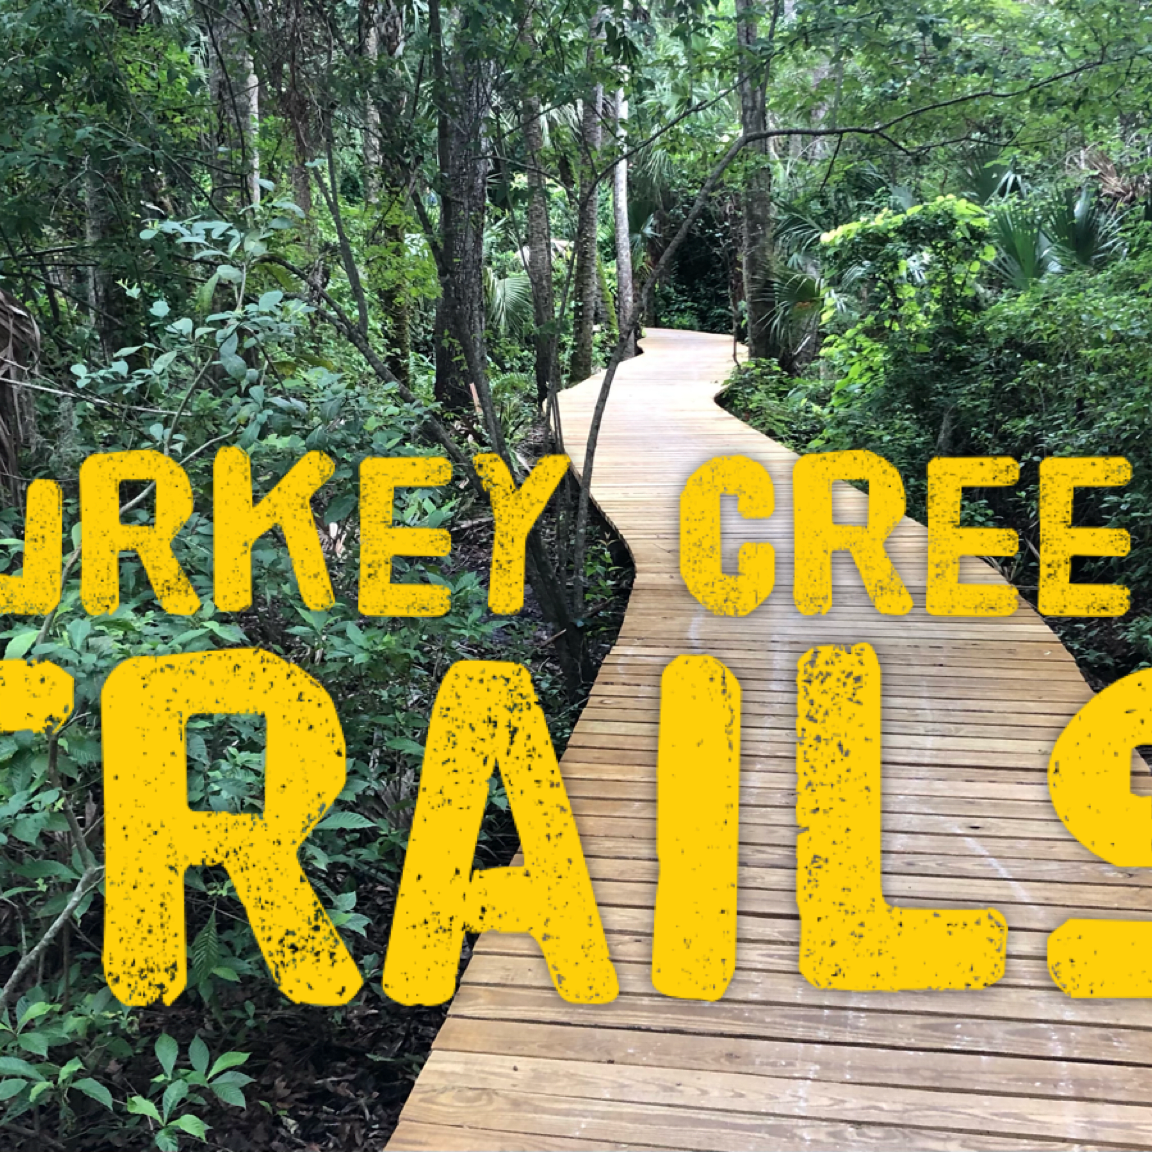 Turkey Creek Trails – Florida Hikes